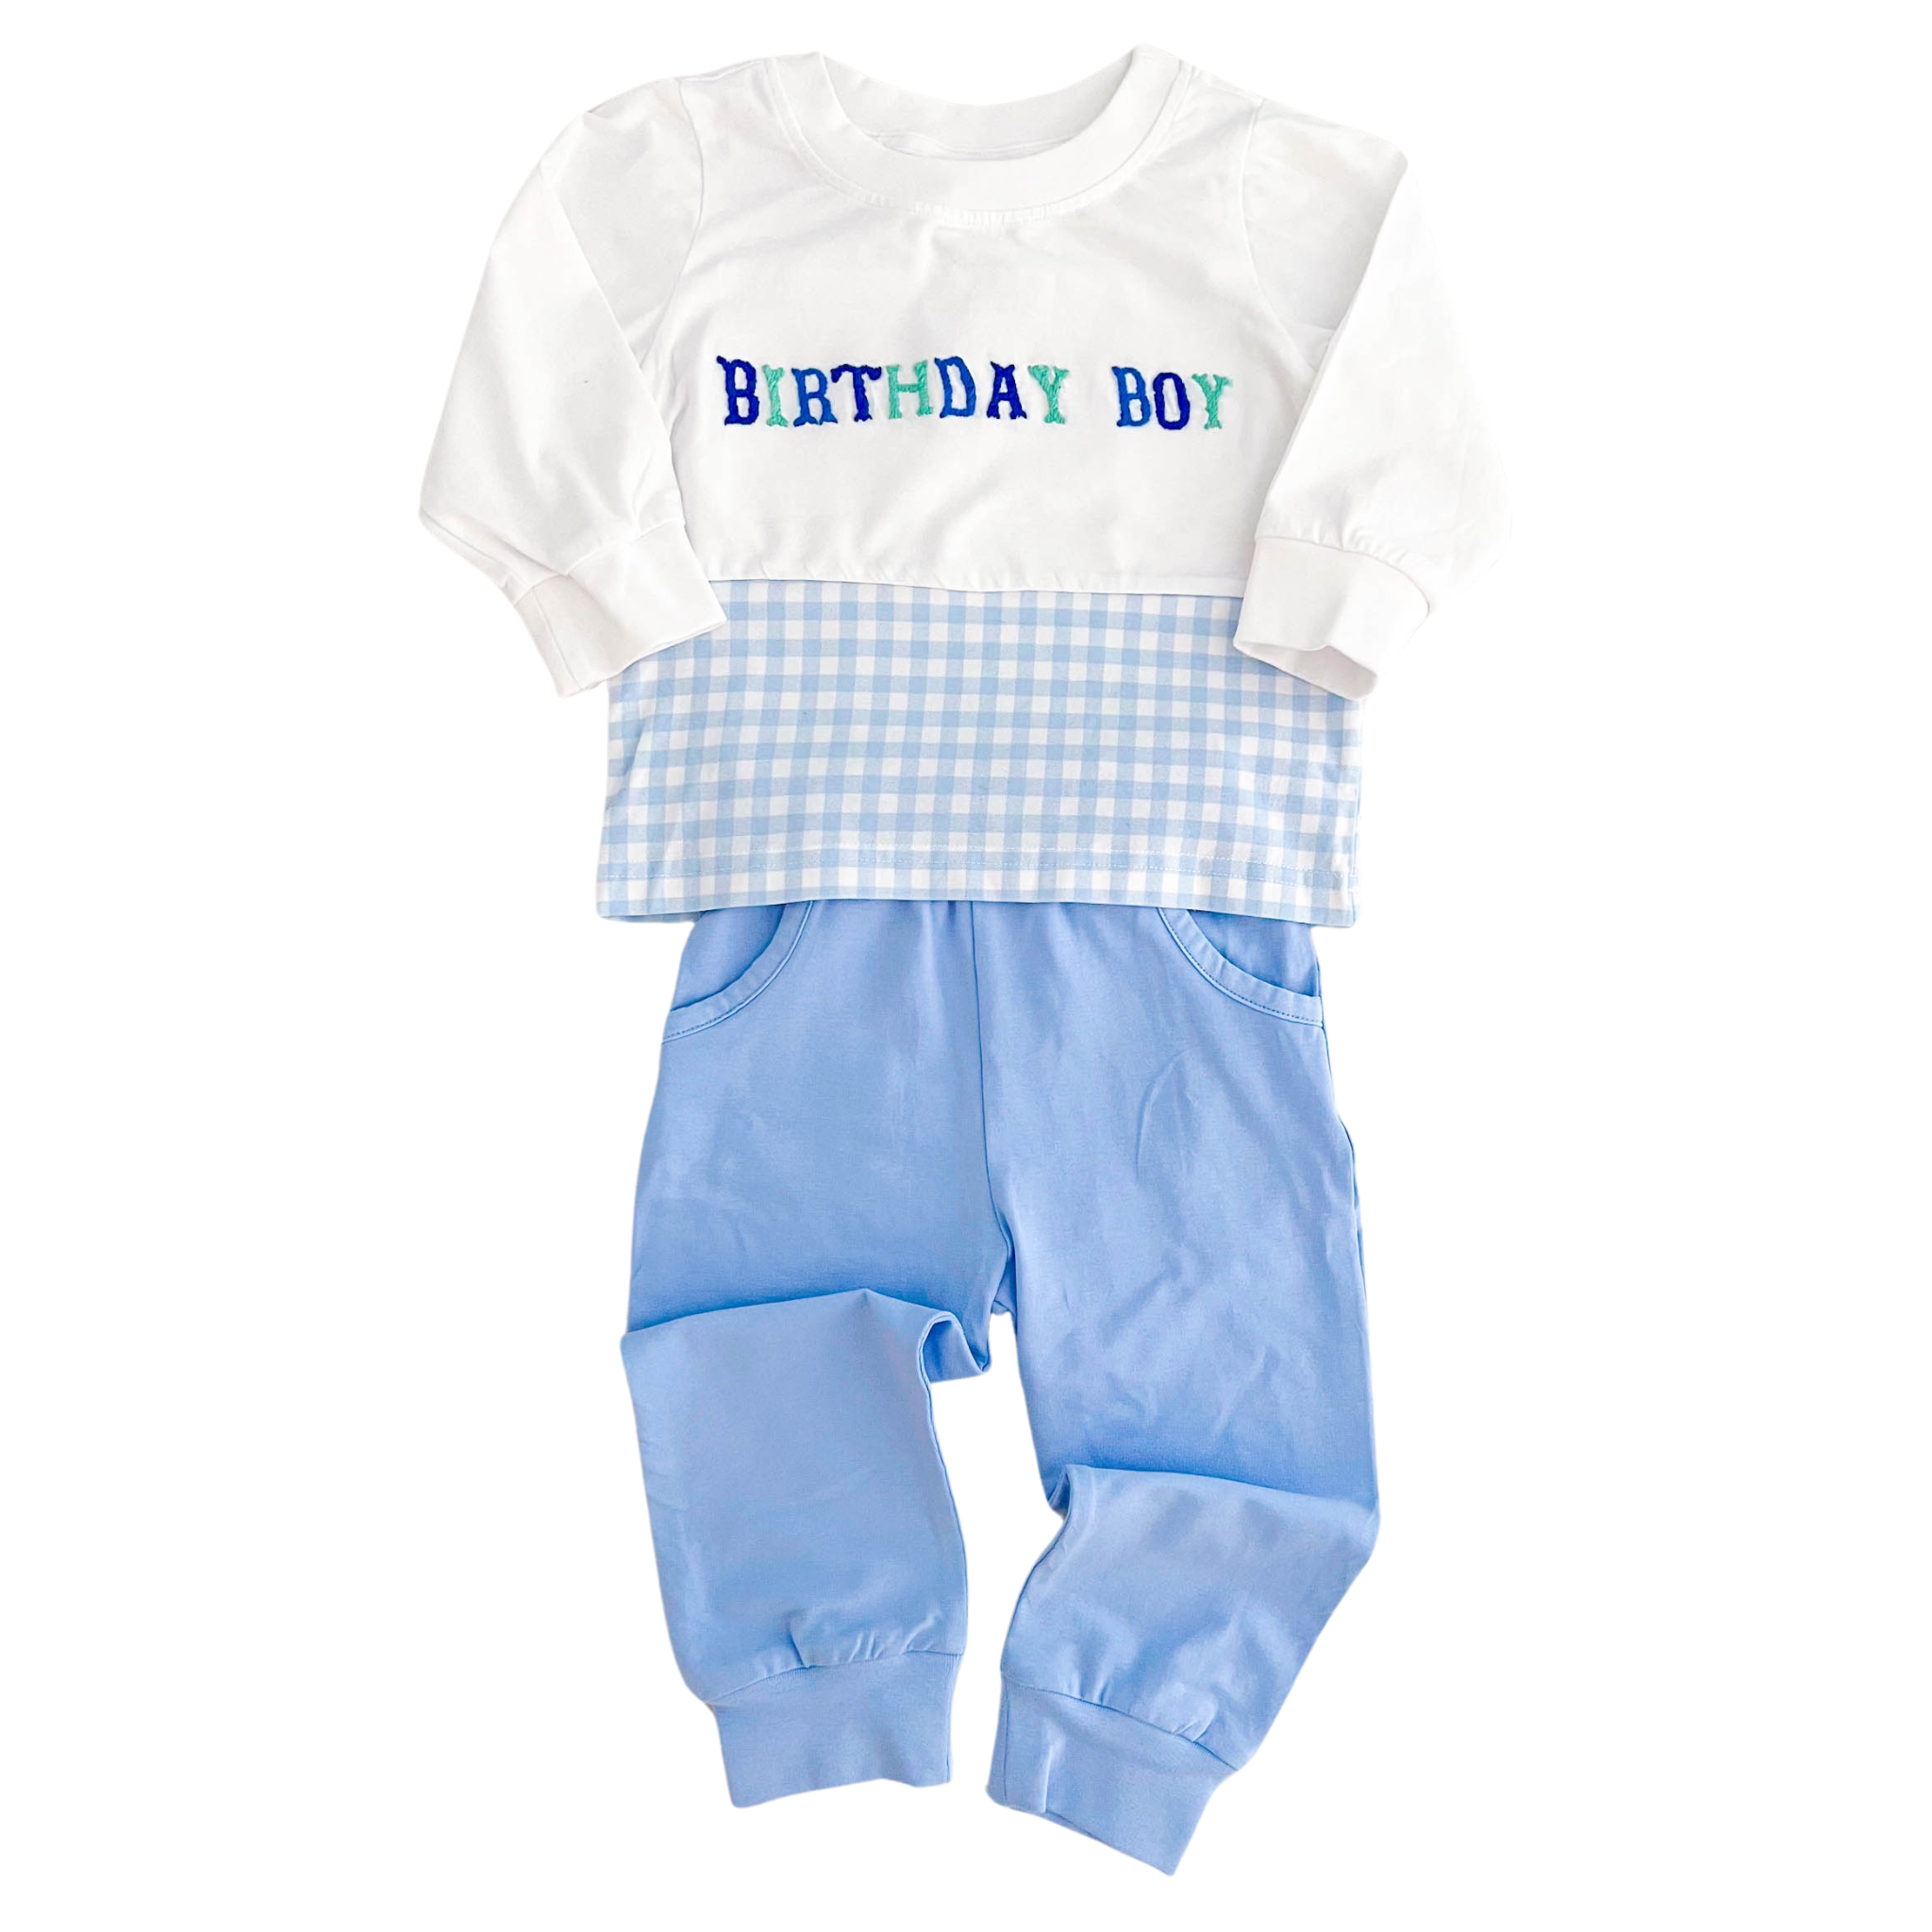 Birthday Boy Gingham Pant Set